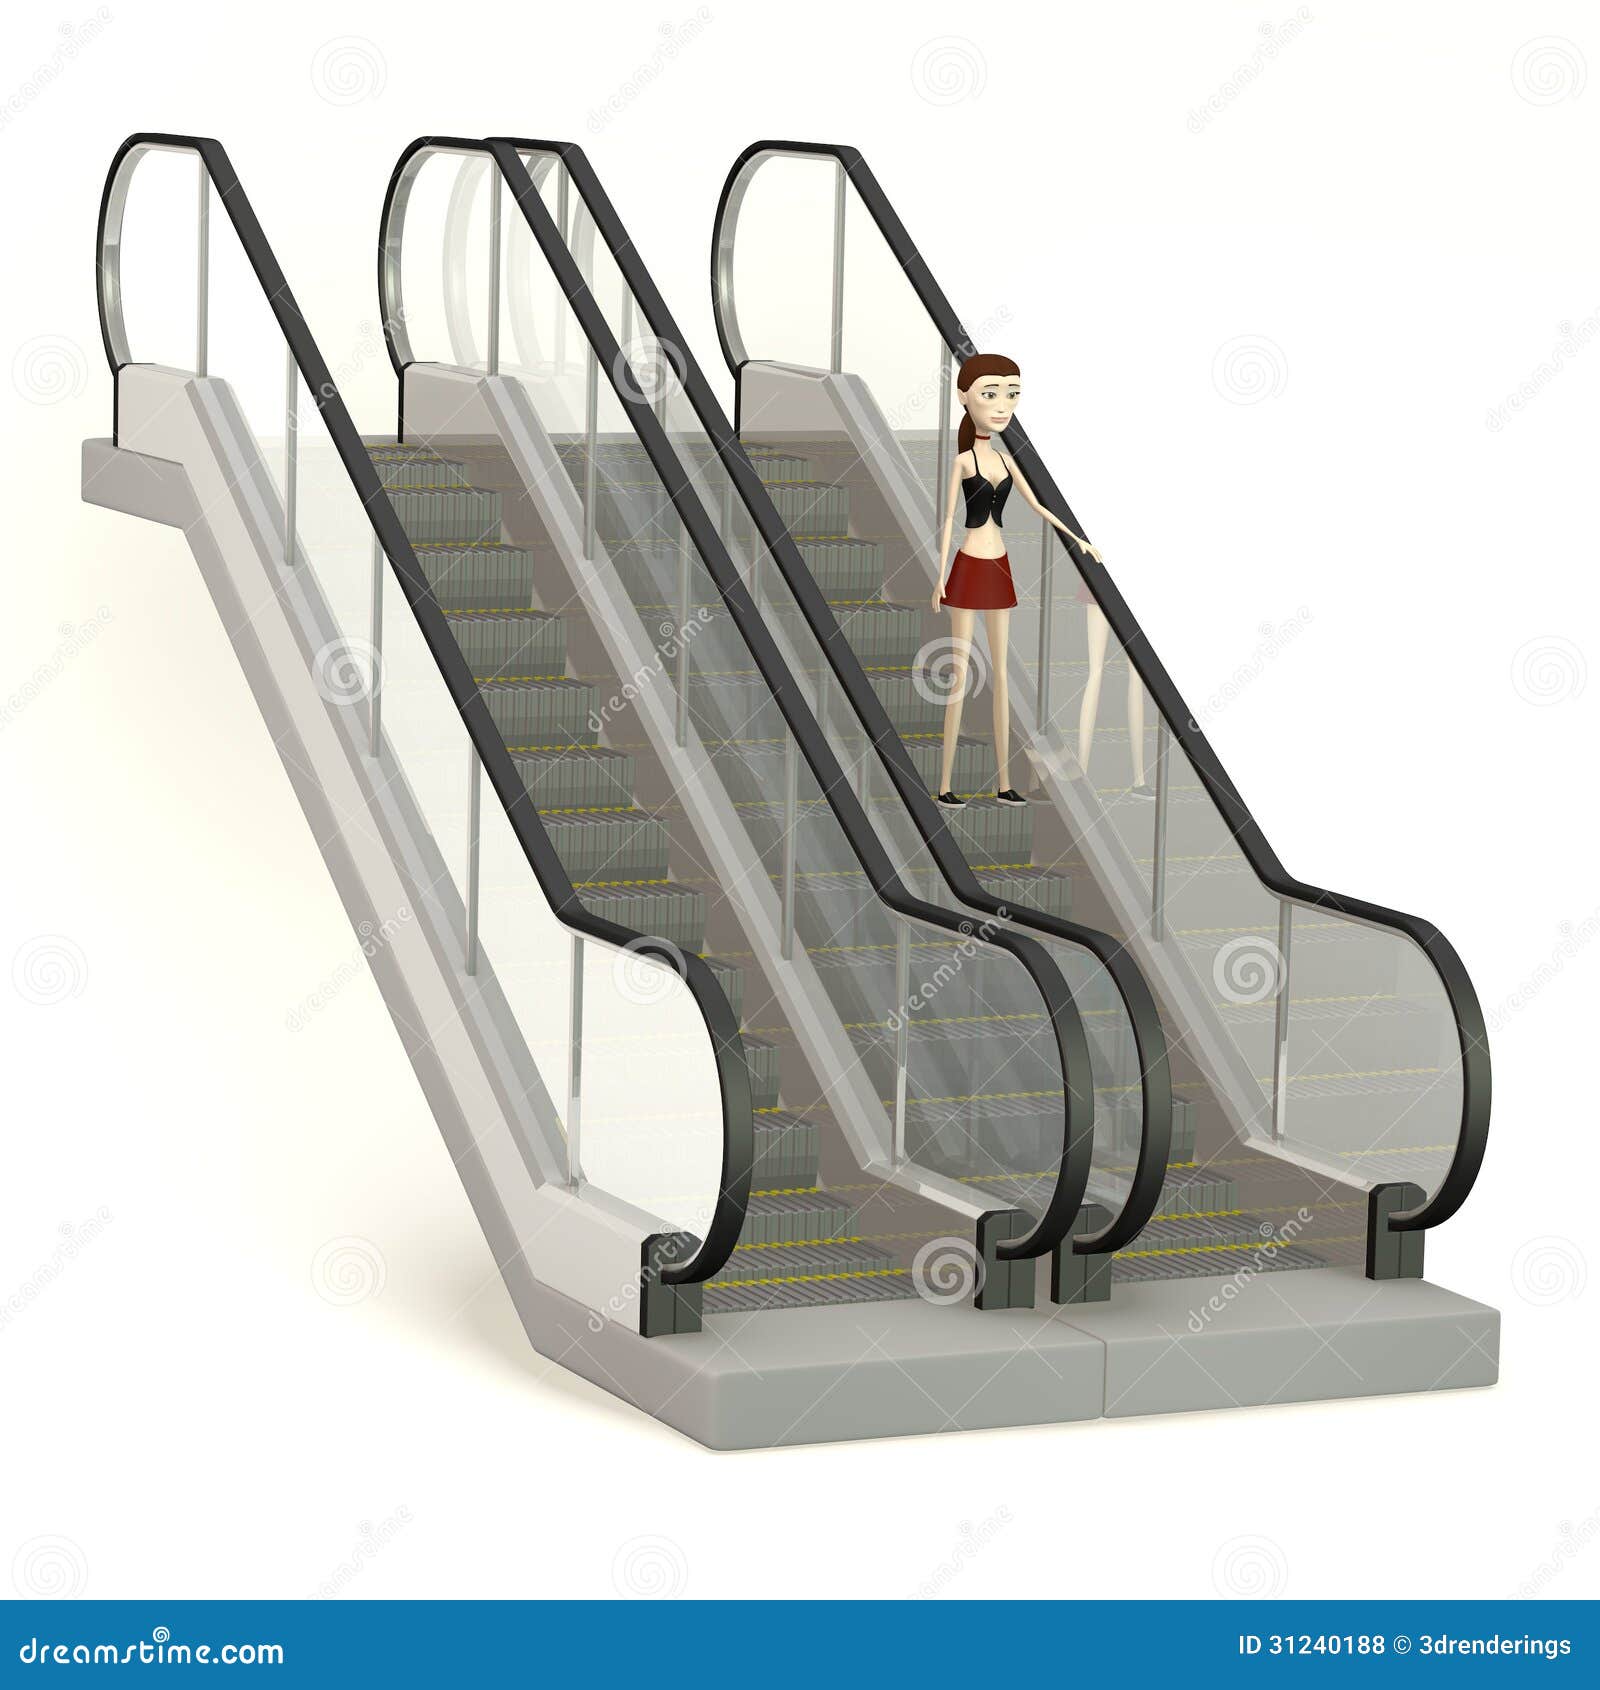 clipart escalator - photo #37